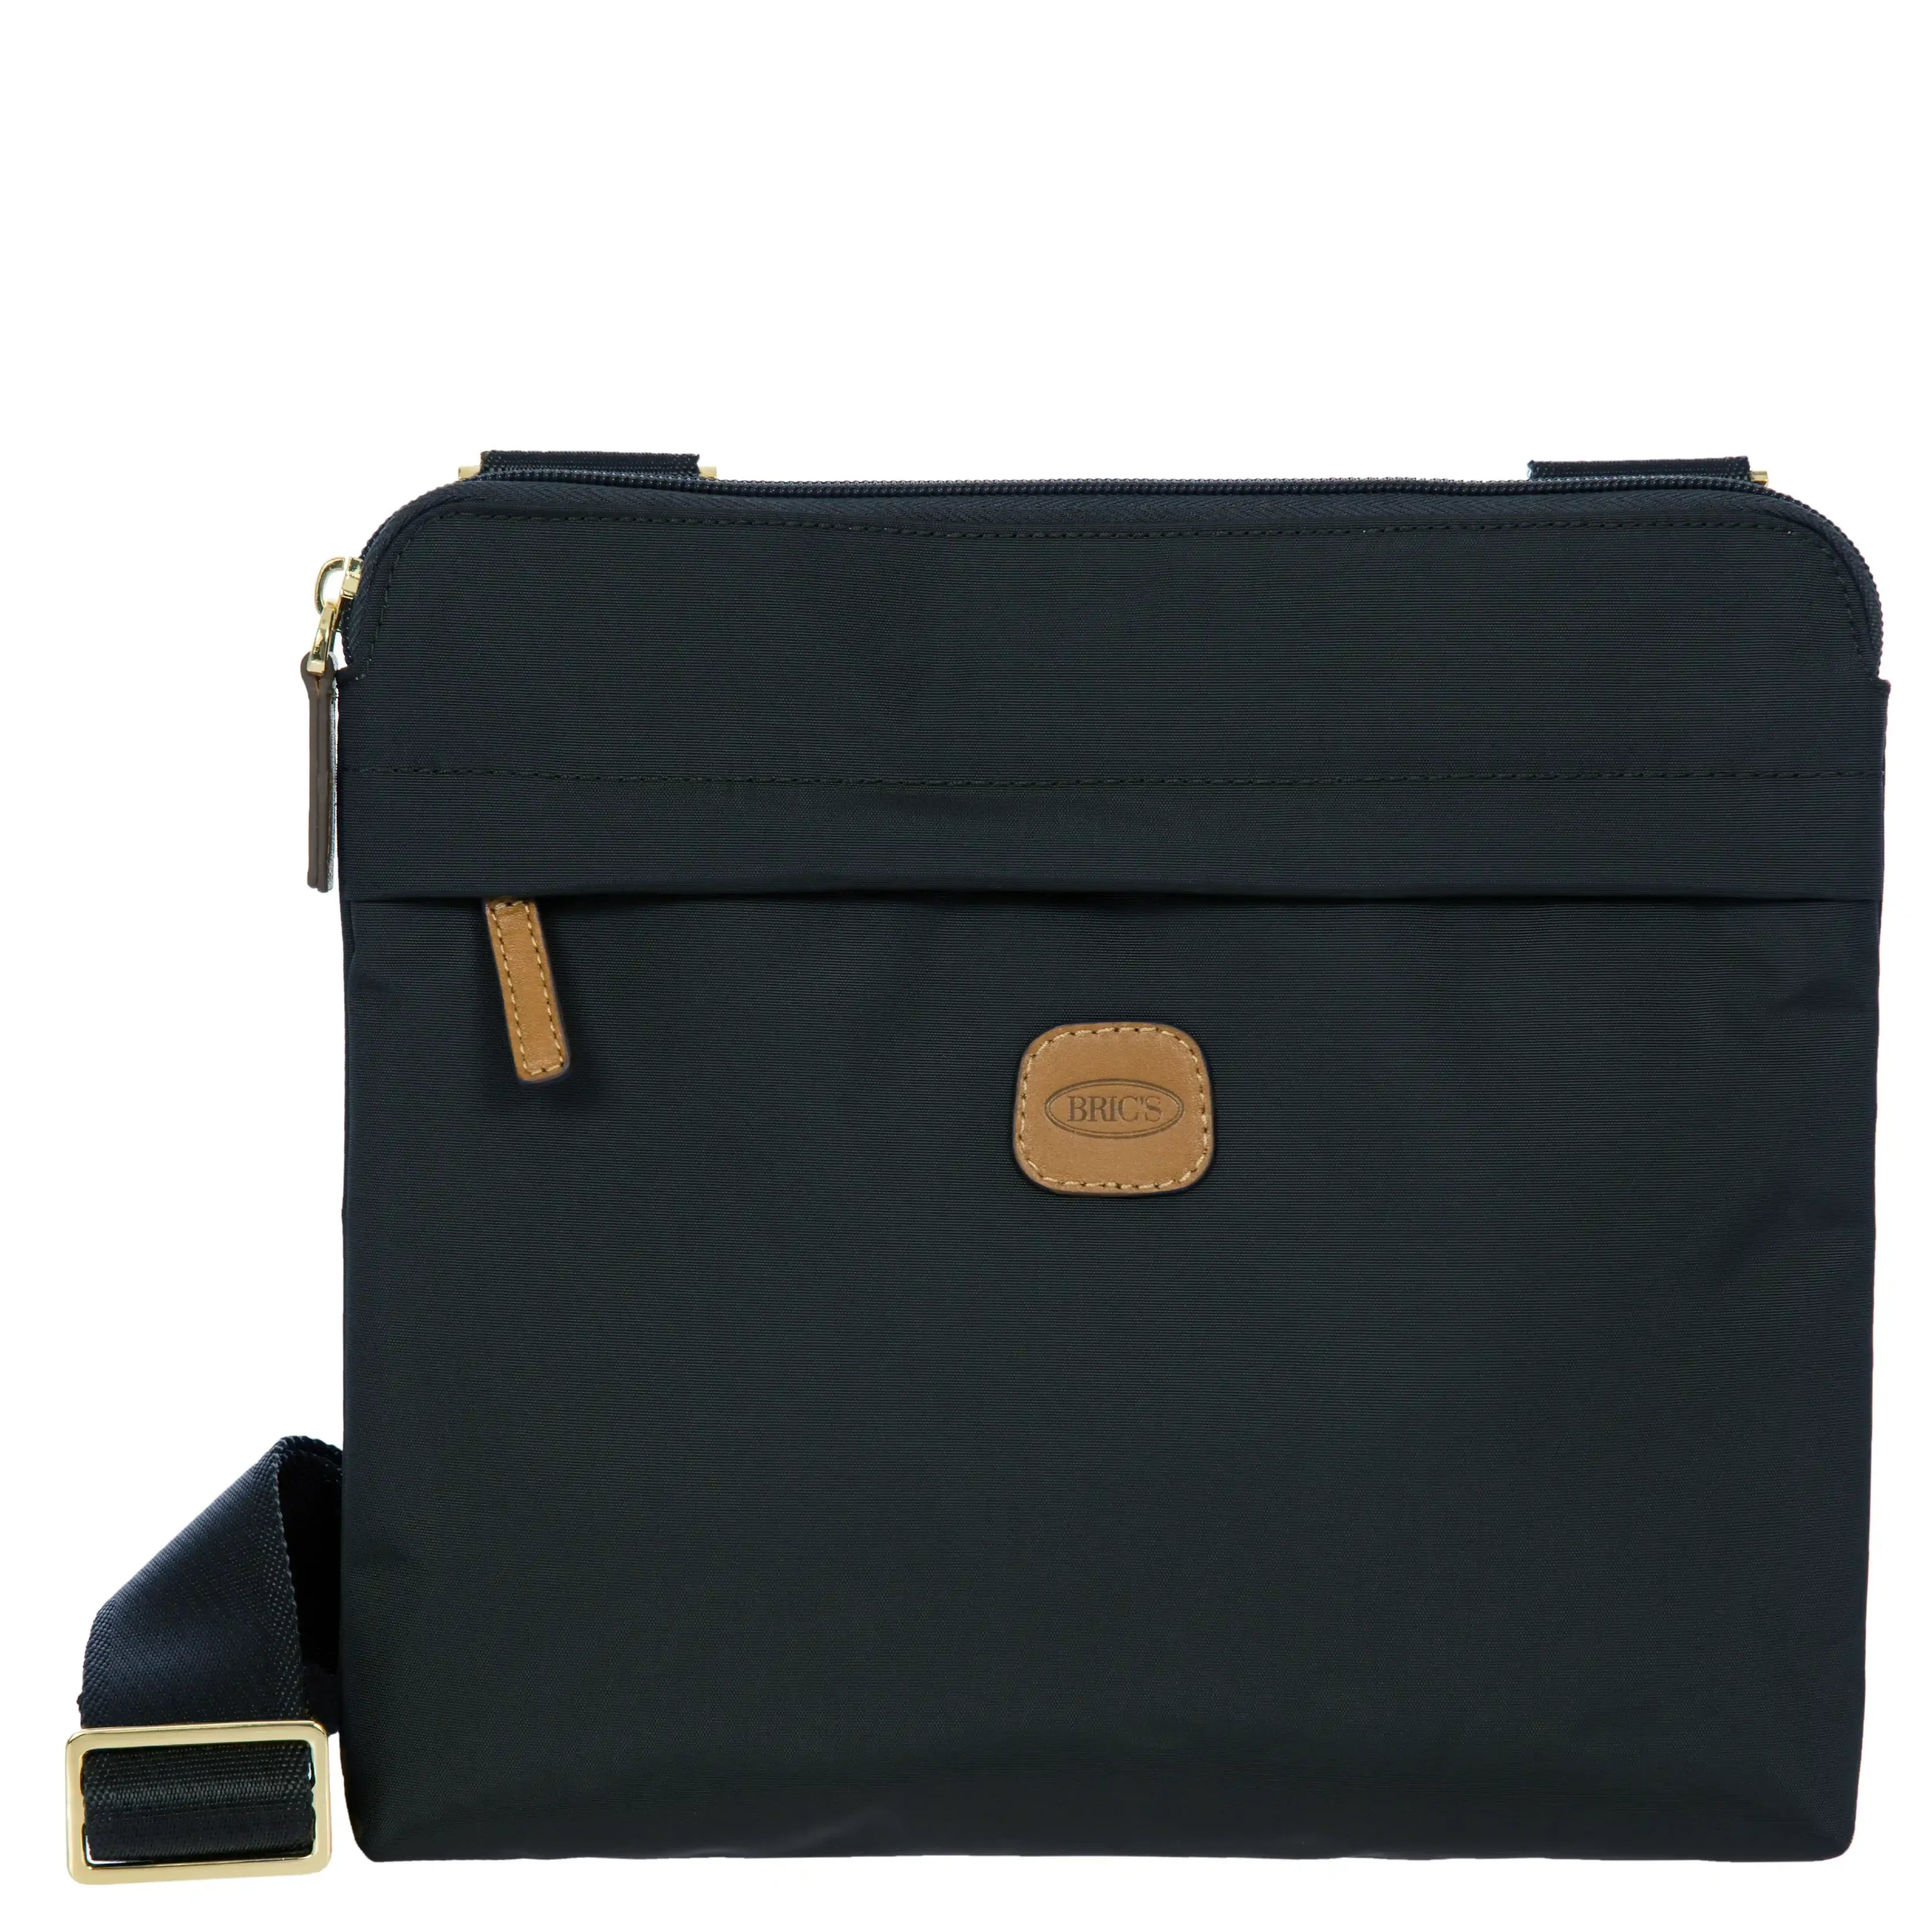 Brics X-Bag Shoulderbag 26 cm - Olive